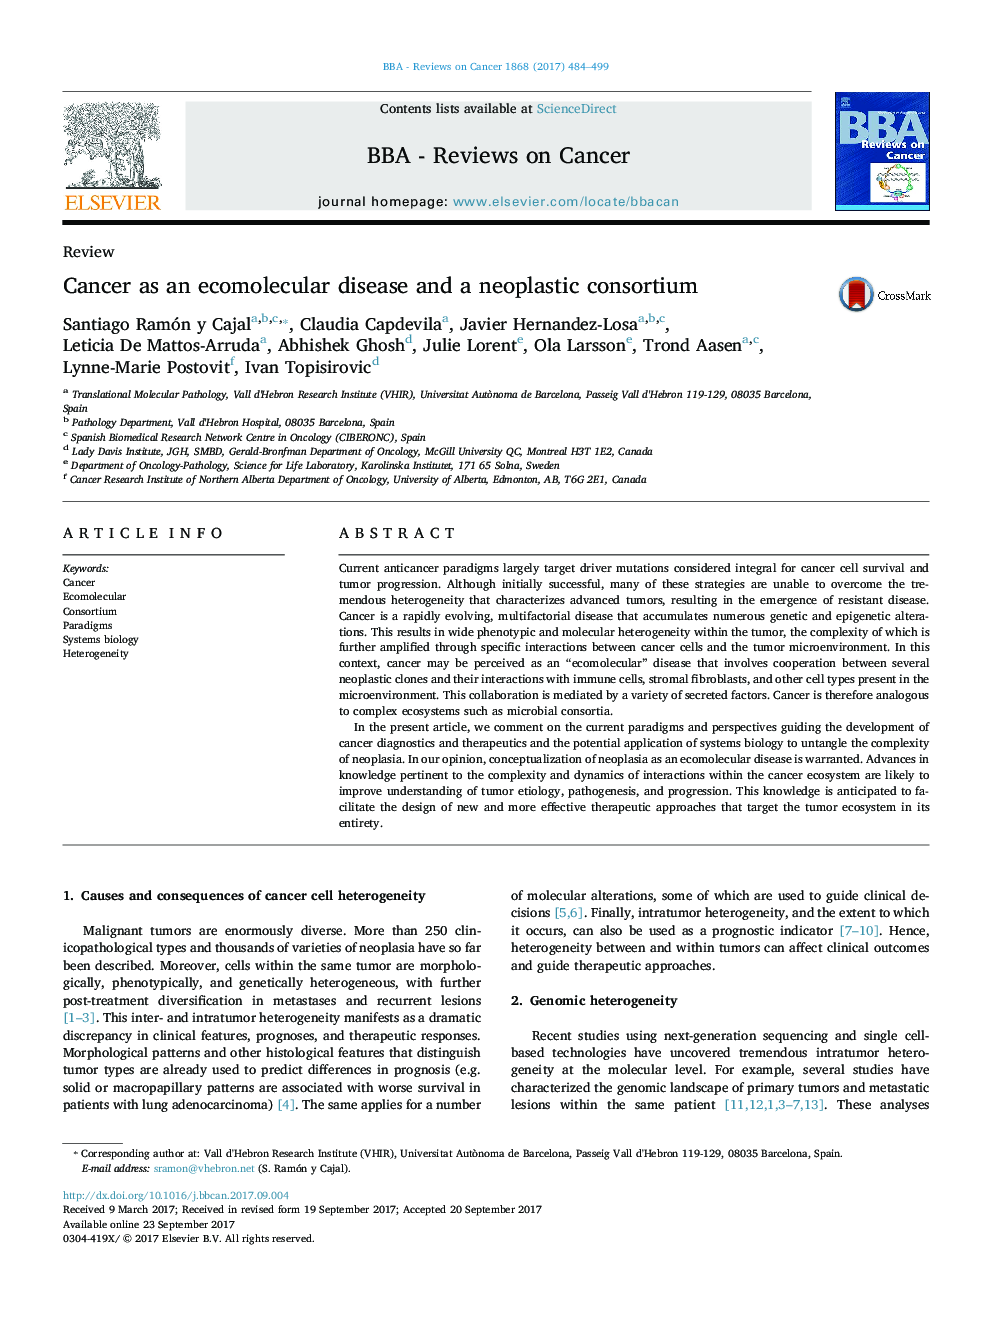 ReviewCancer as an ecomolecular disease and a neoplastic consortium